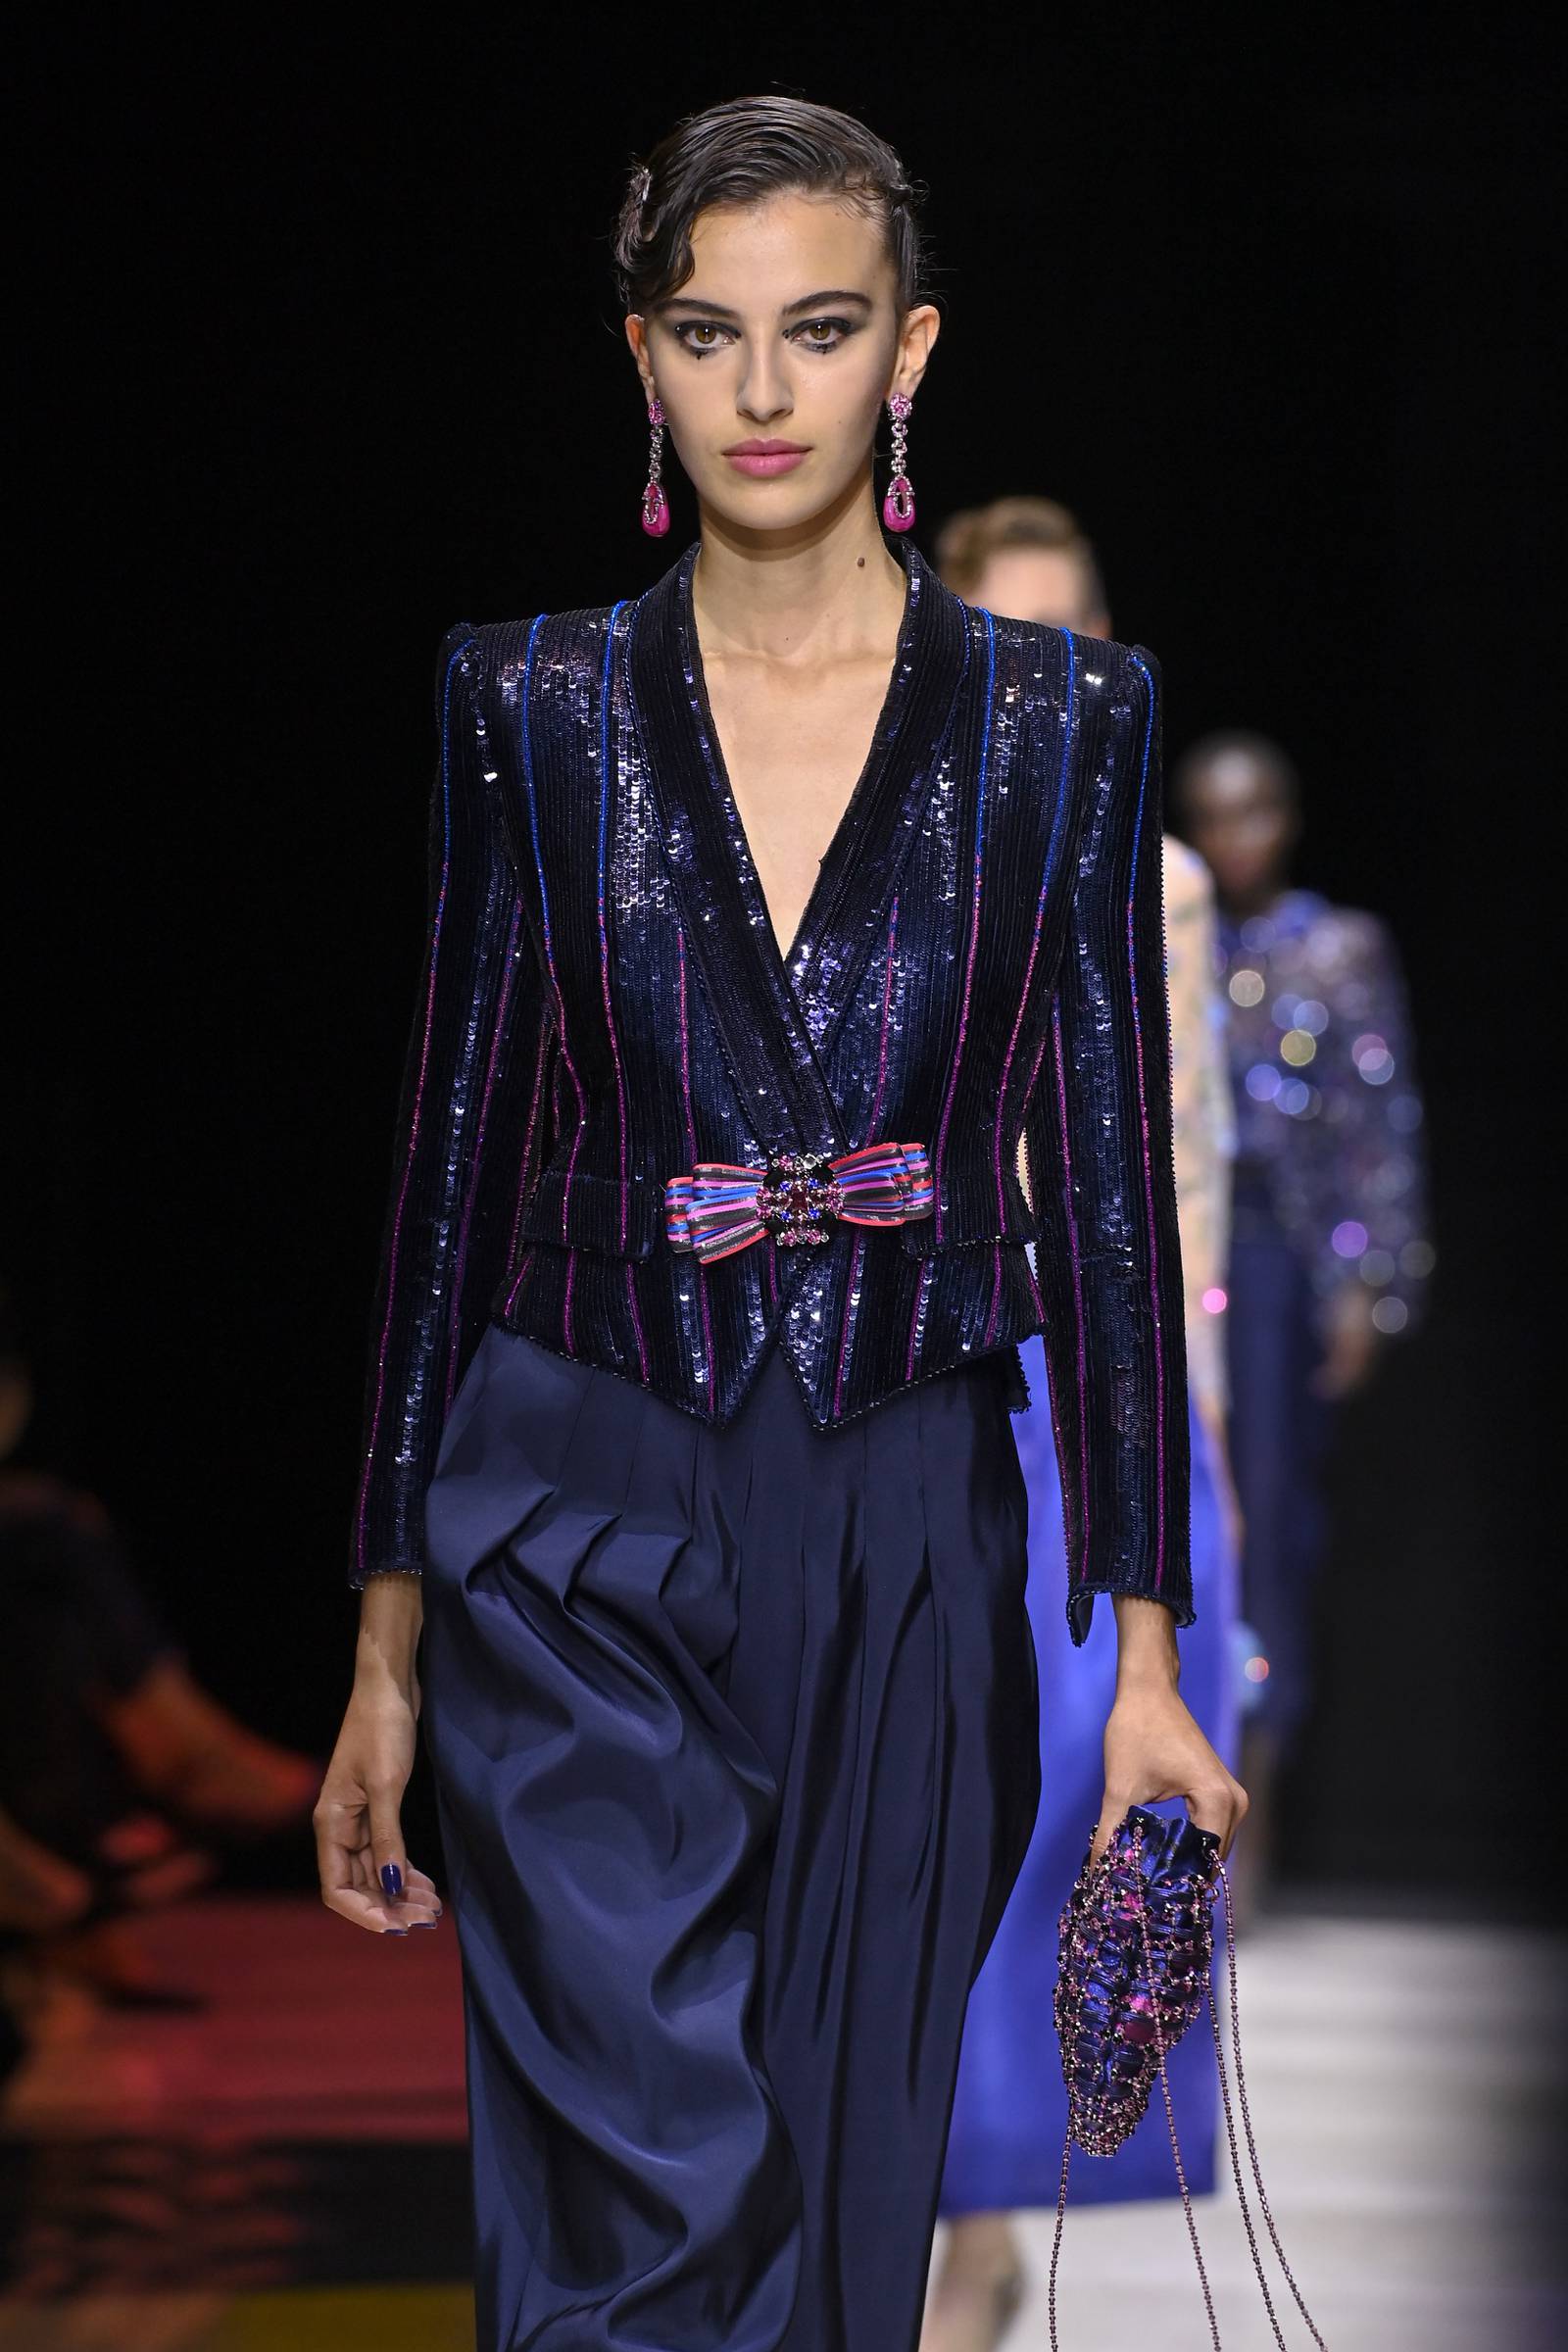 Amira Al Zuhair, the Saudi model ruling Paris's haute couture catwalks